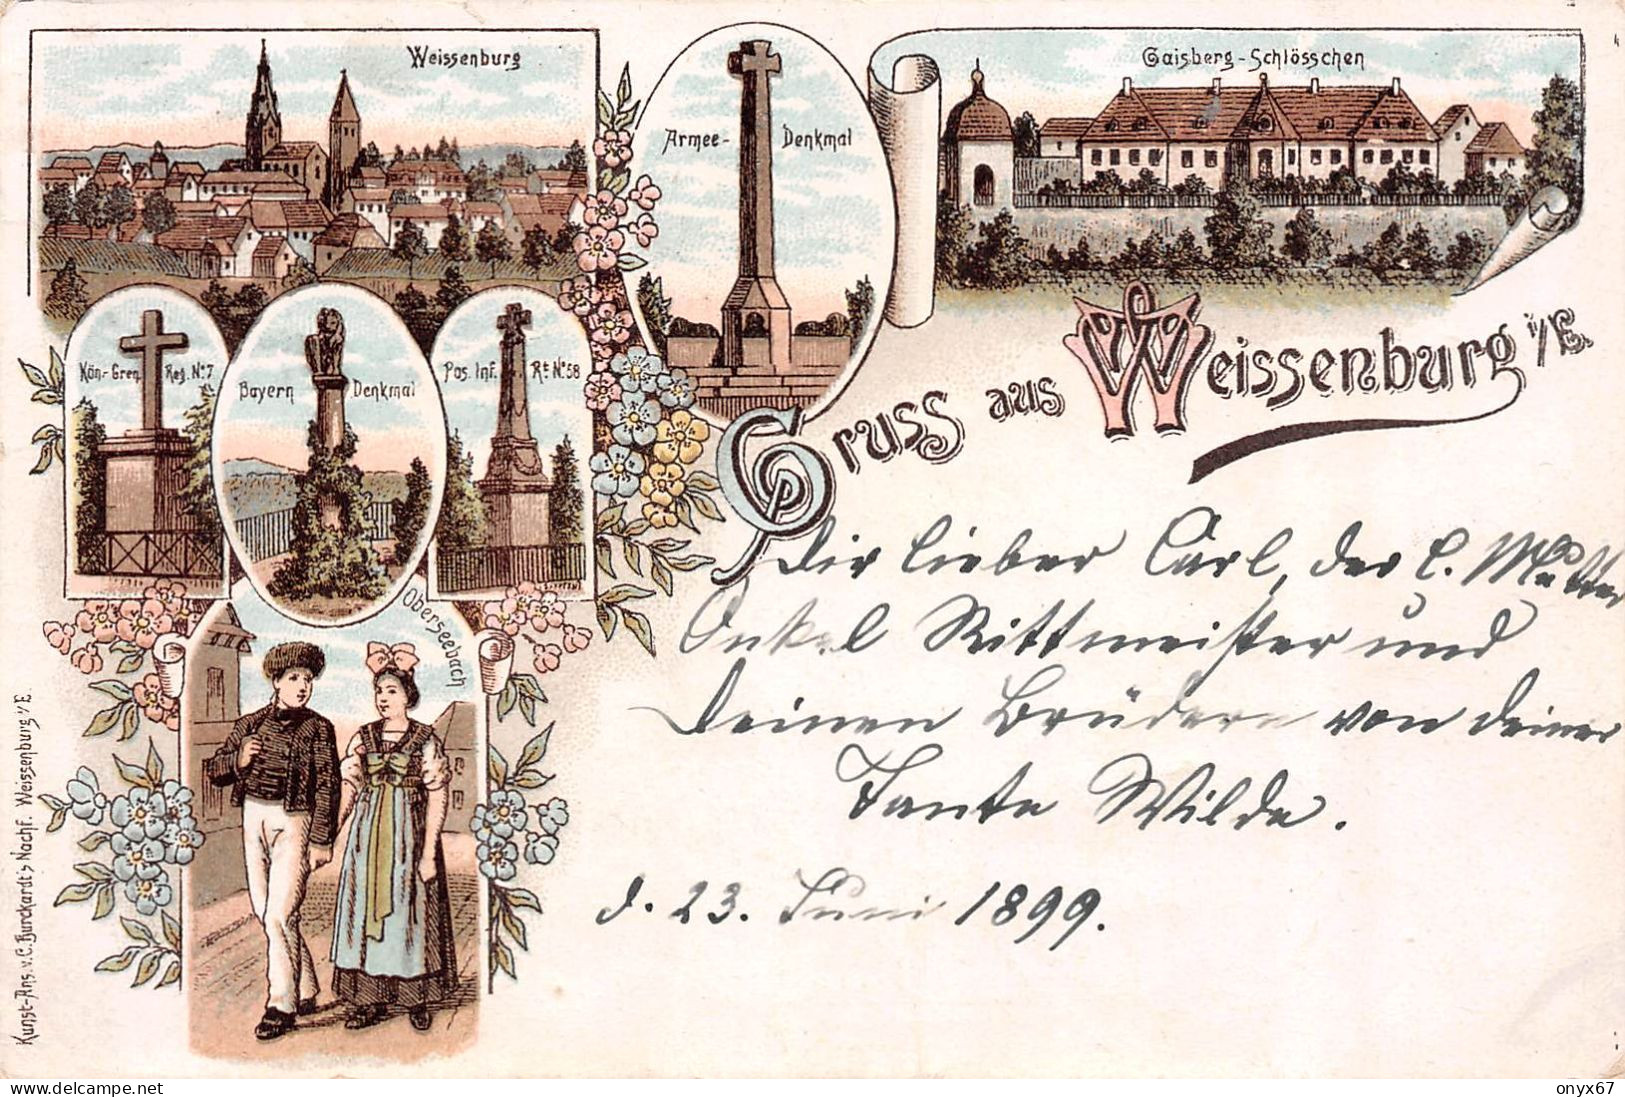 Gruss Aus WEISSENBURG-Wissembourg-67-Bas-Rhin- Oberseebach-Gaisberg-Denkmal - Lithographie Couleur - 1899 - - Wissembourg